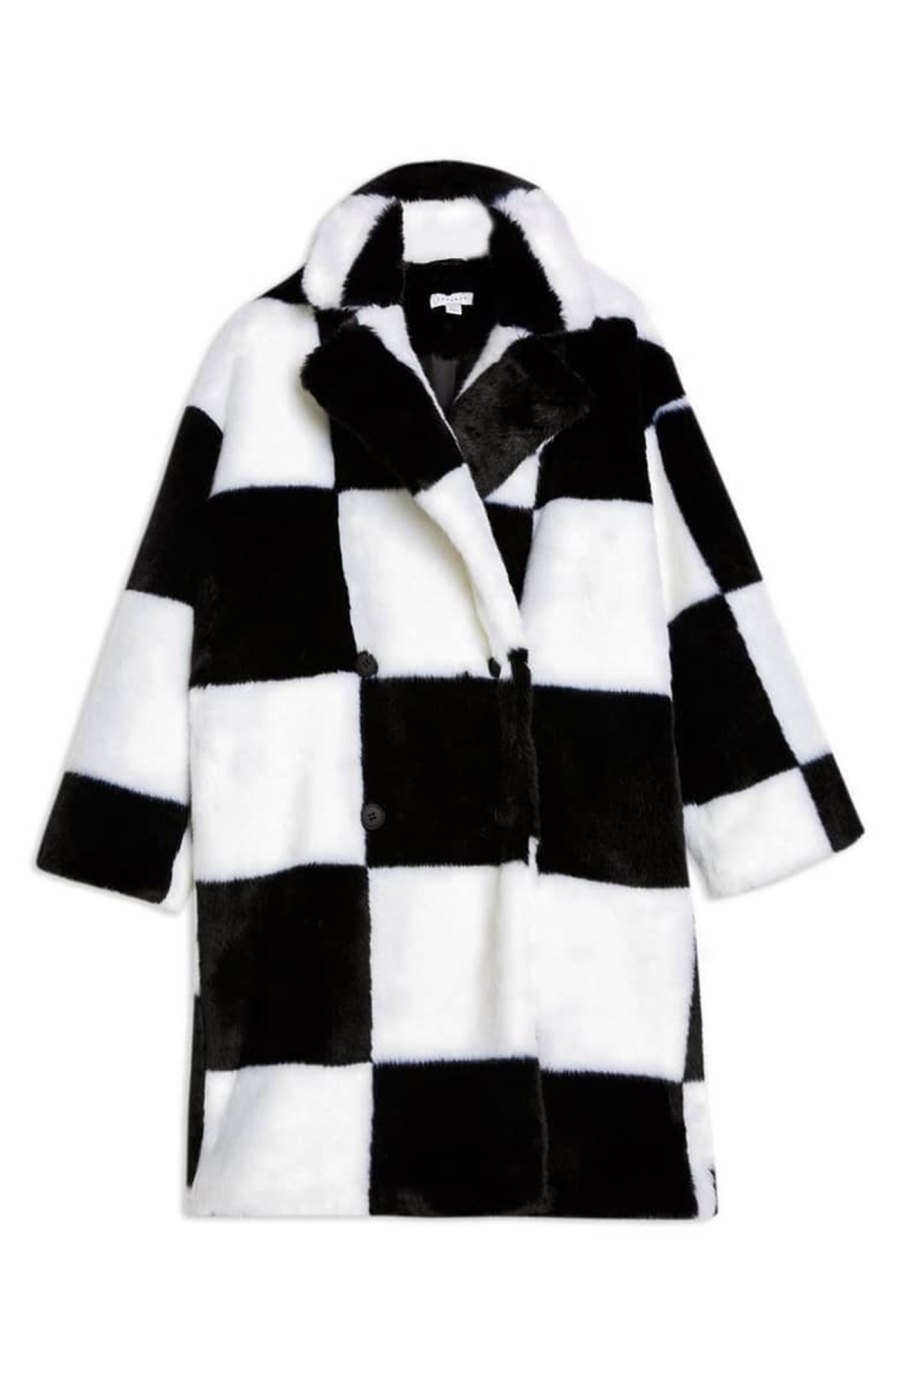 7 Black Midi Faux Fur Coats to Get Bella Hadid's Style